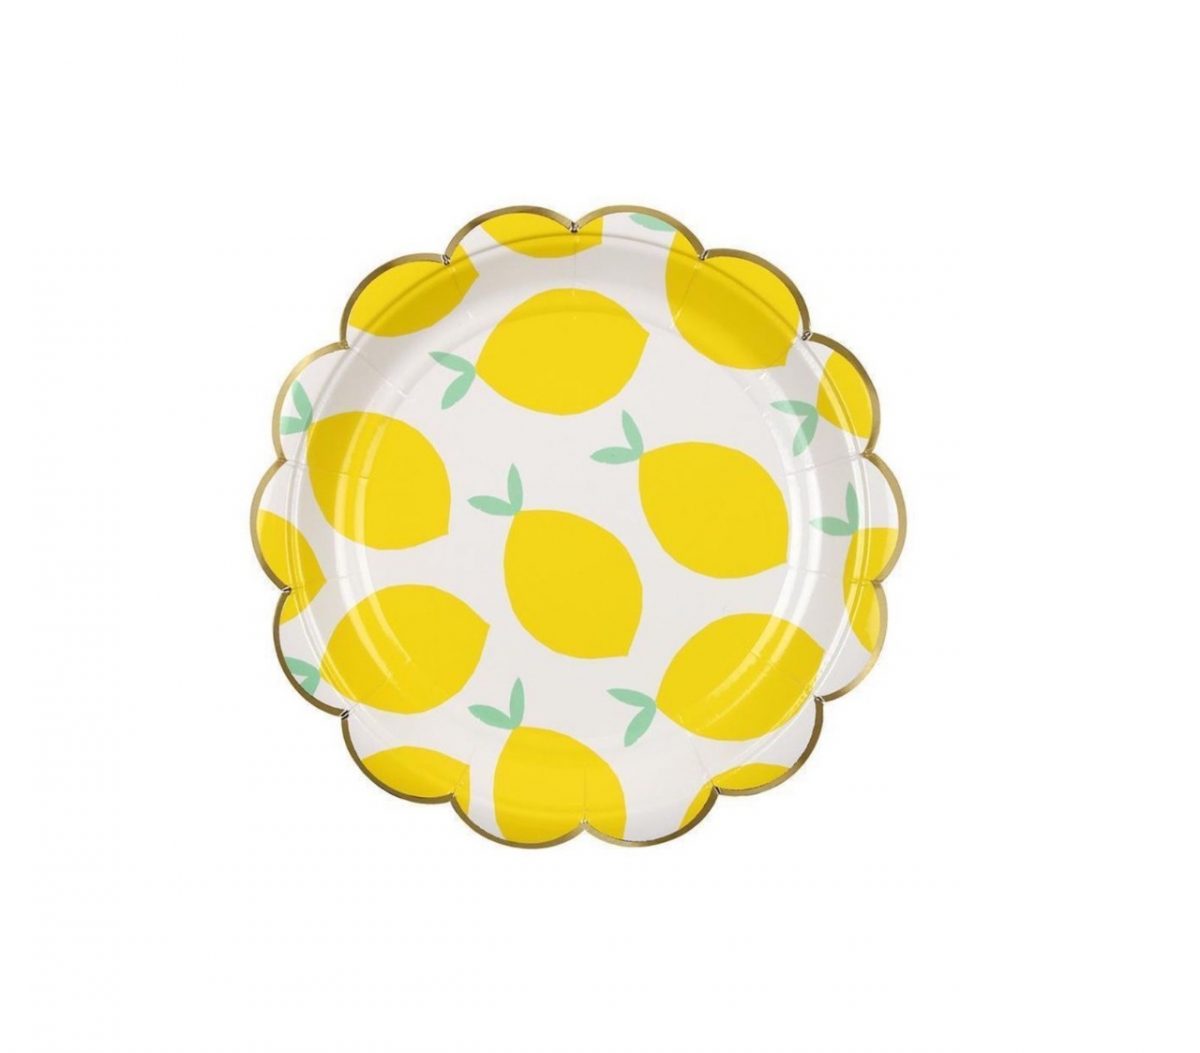 7-inch-lemon-themed-plates.